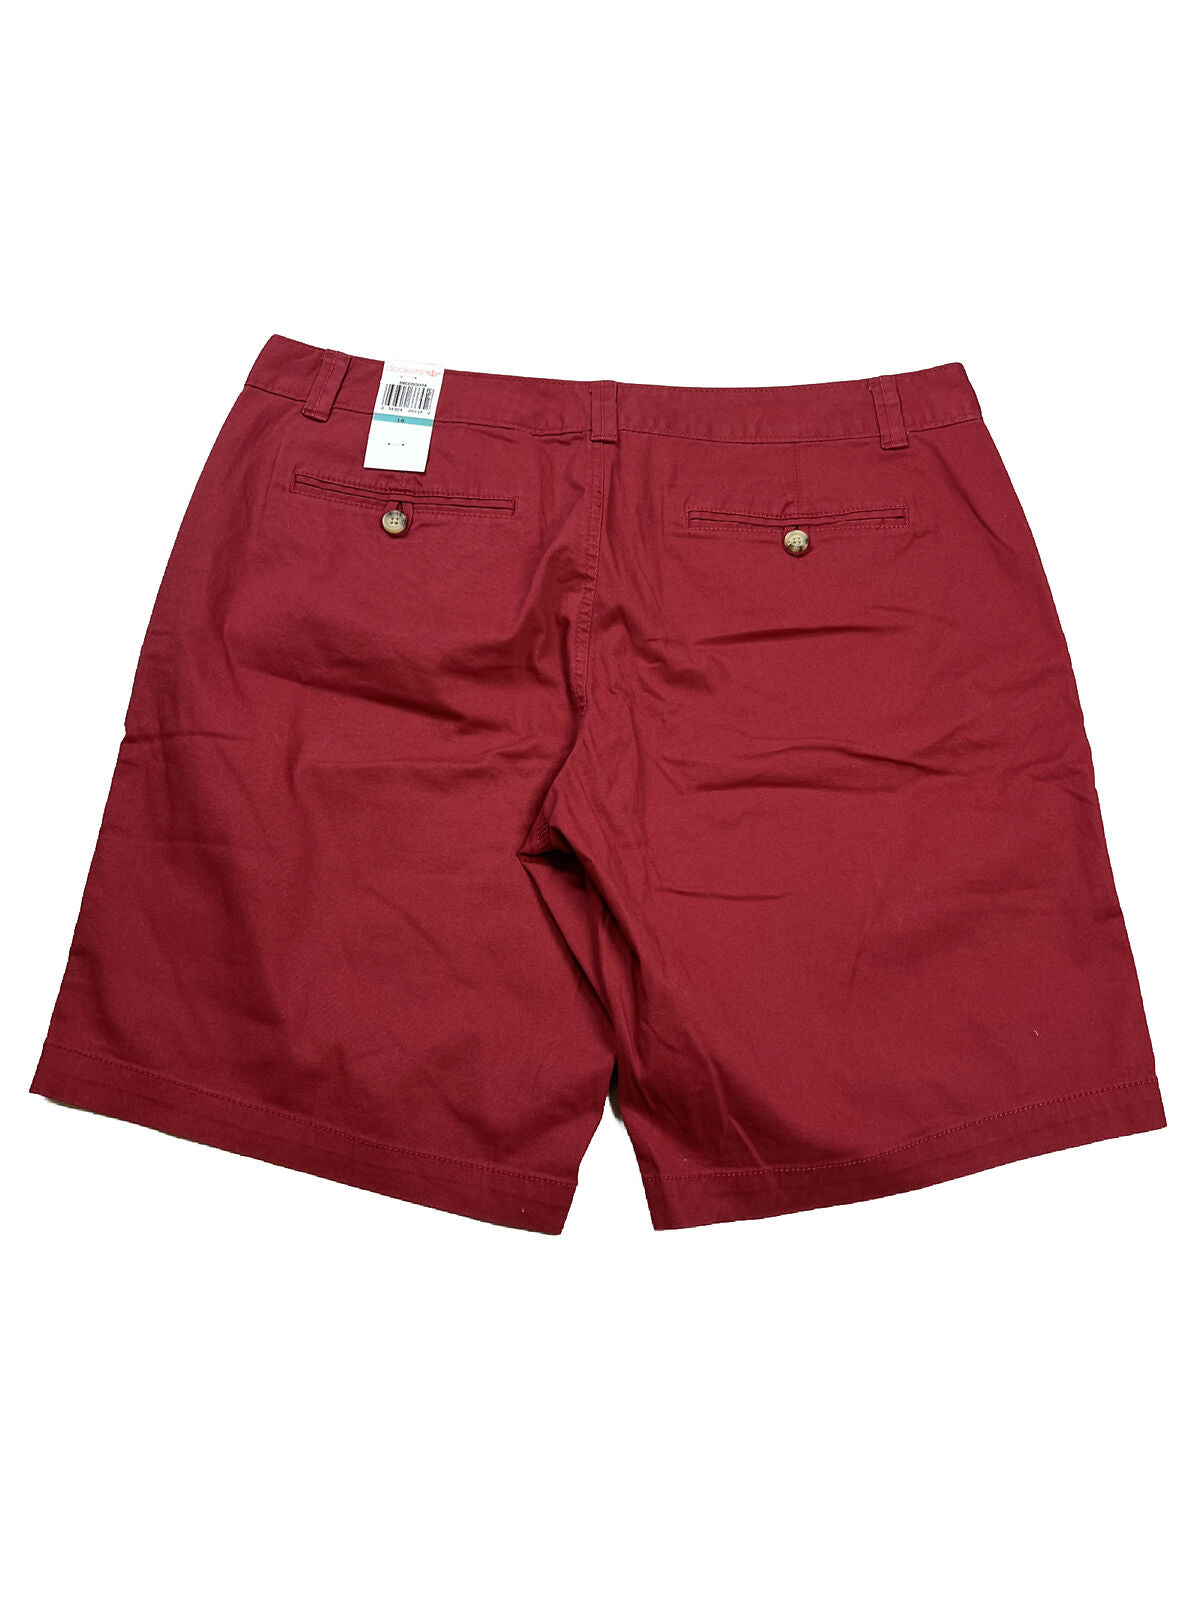 NEW Dockers Women's Red Truly Slimming Khaki Shorts - 16